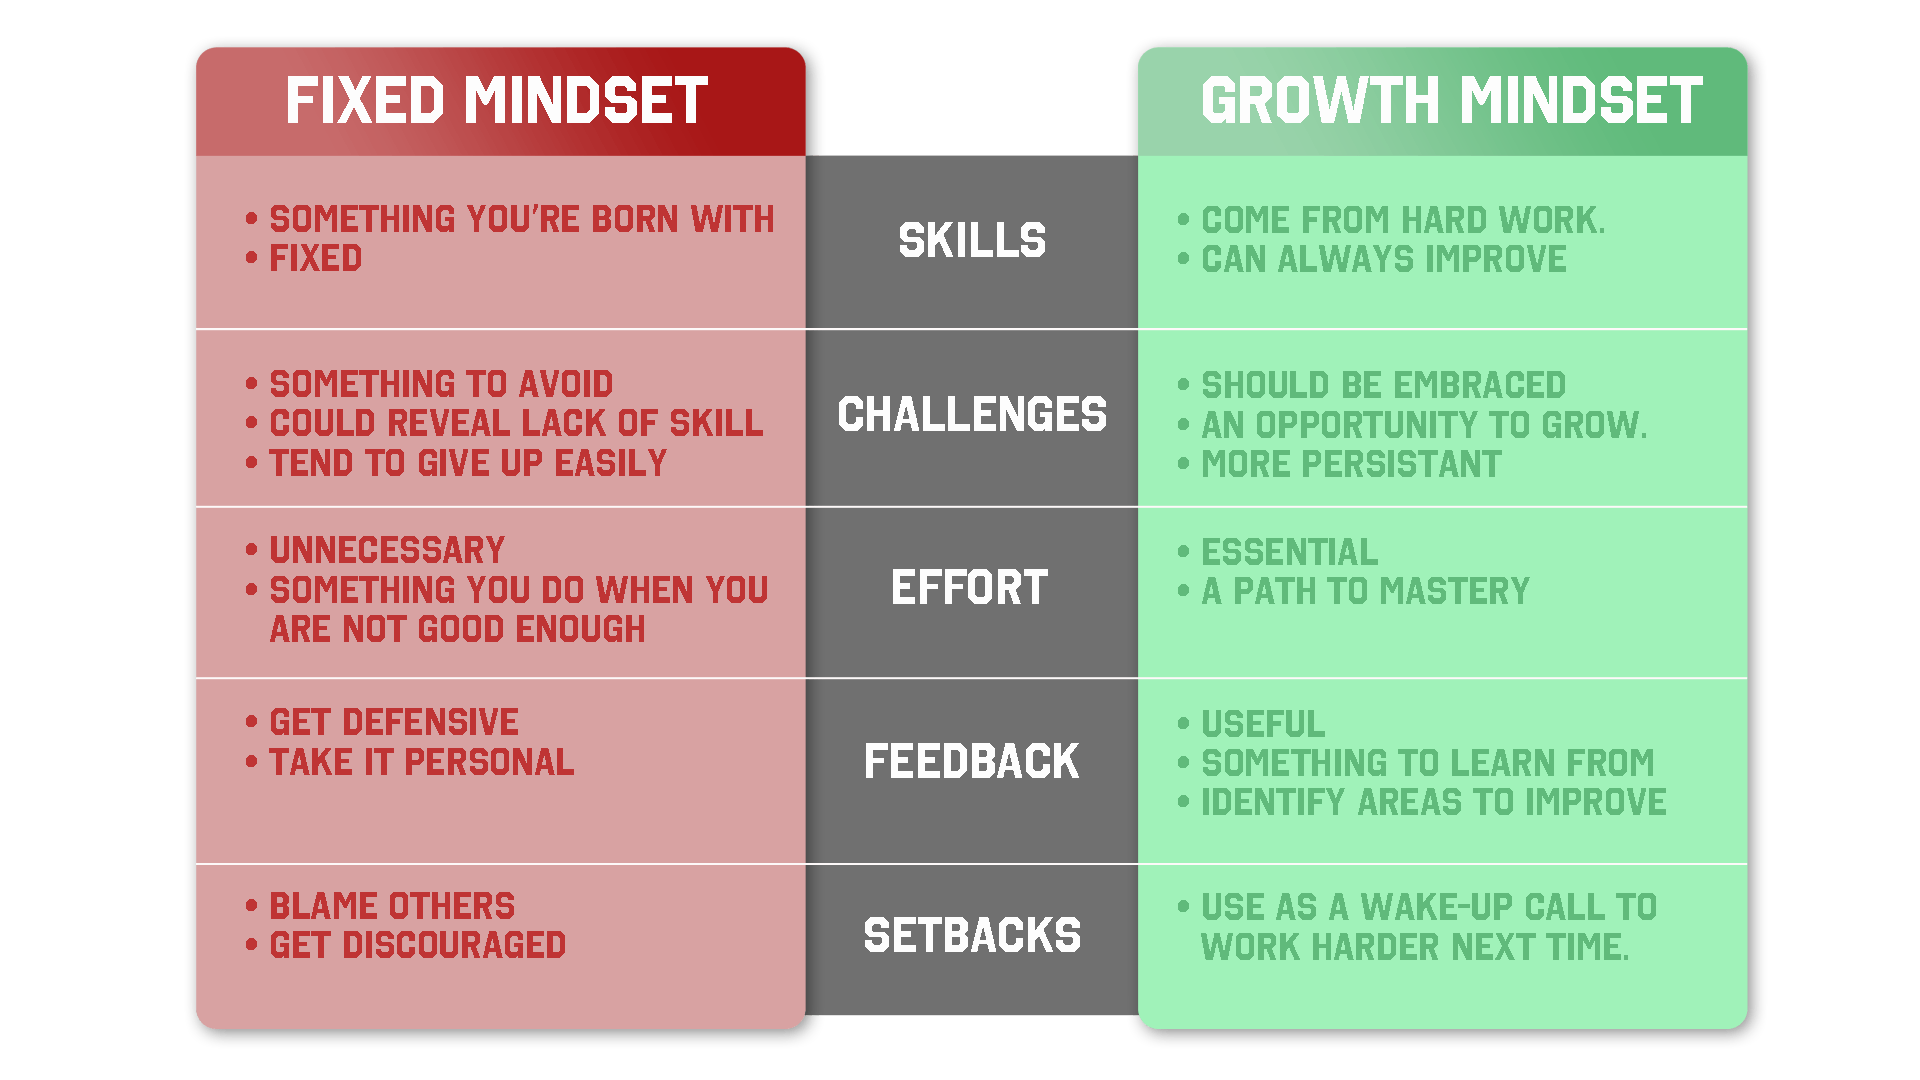 The Growth Mindset Playbook. Growth mindset vs fixed mindset, Fixed mindset, Growth mindset